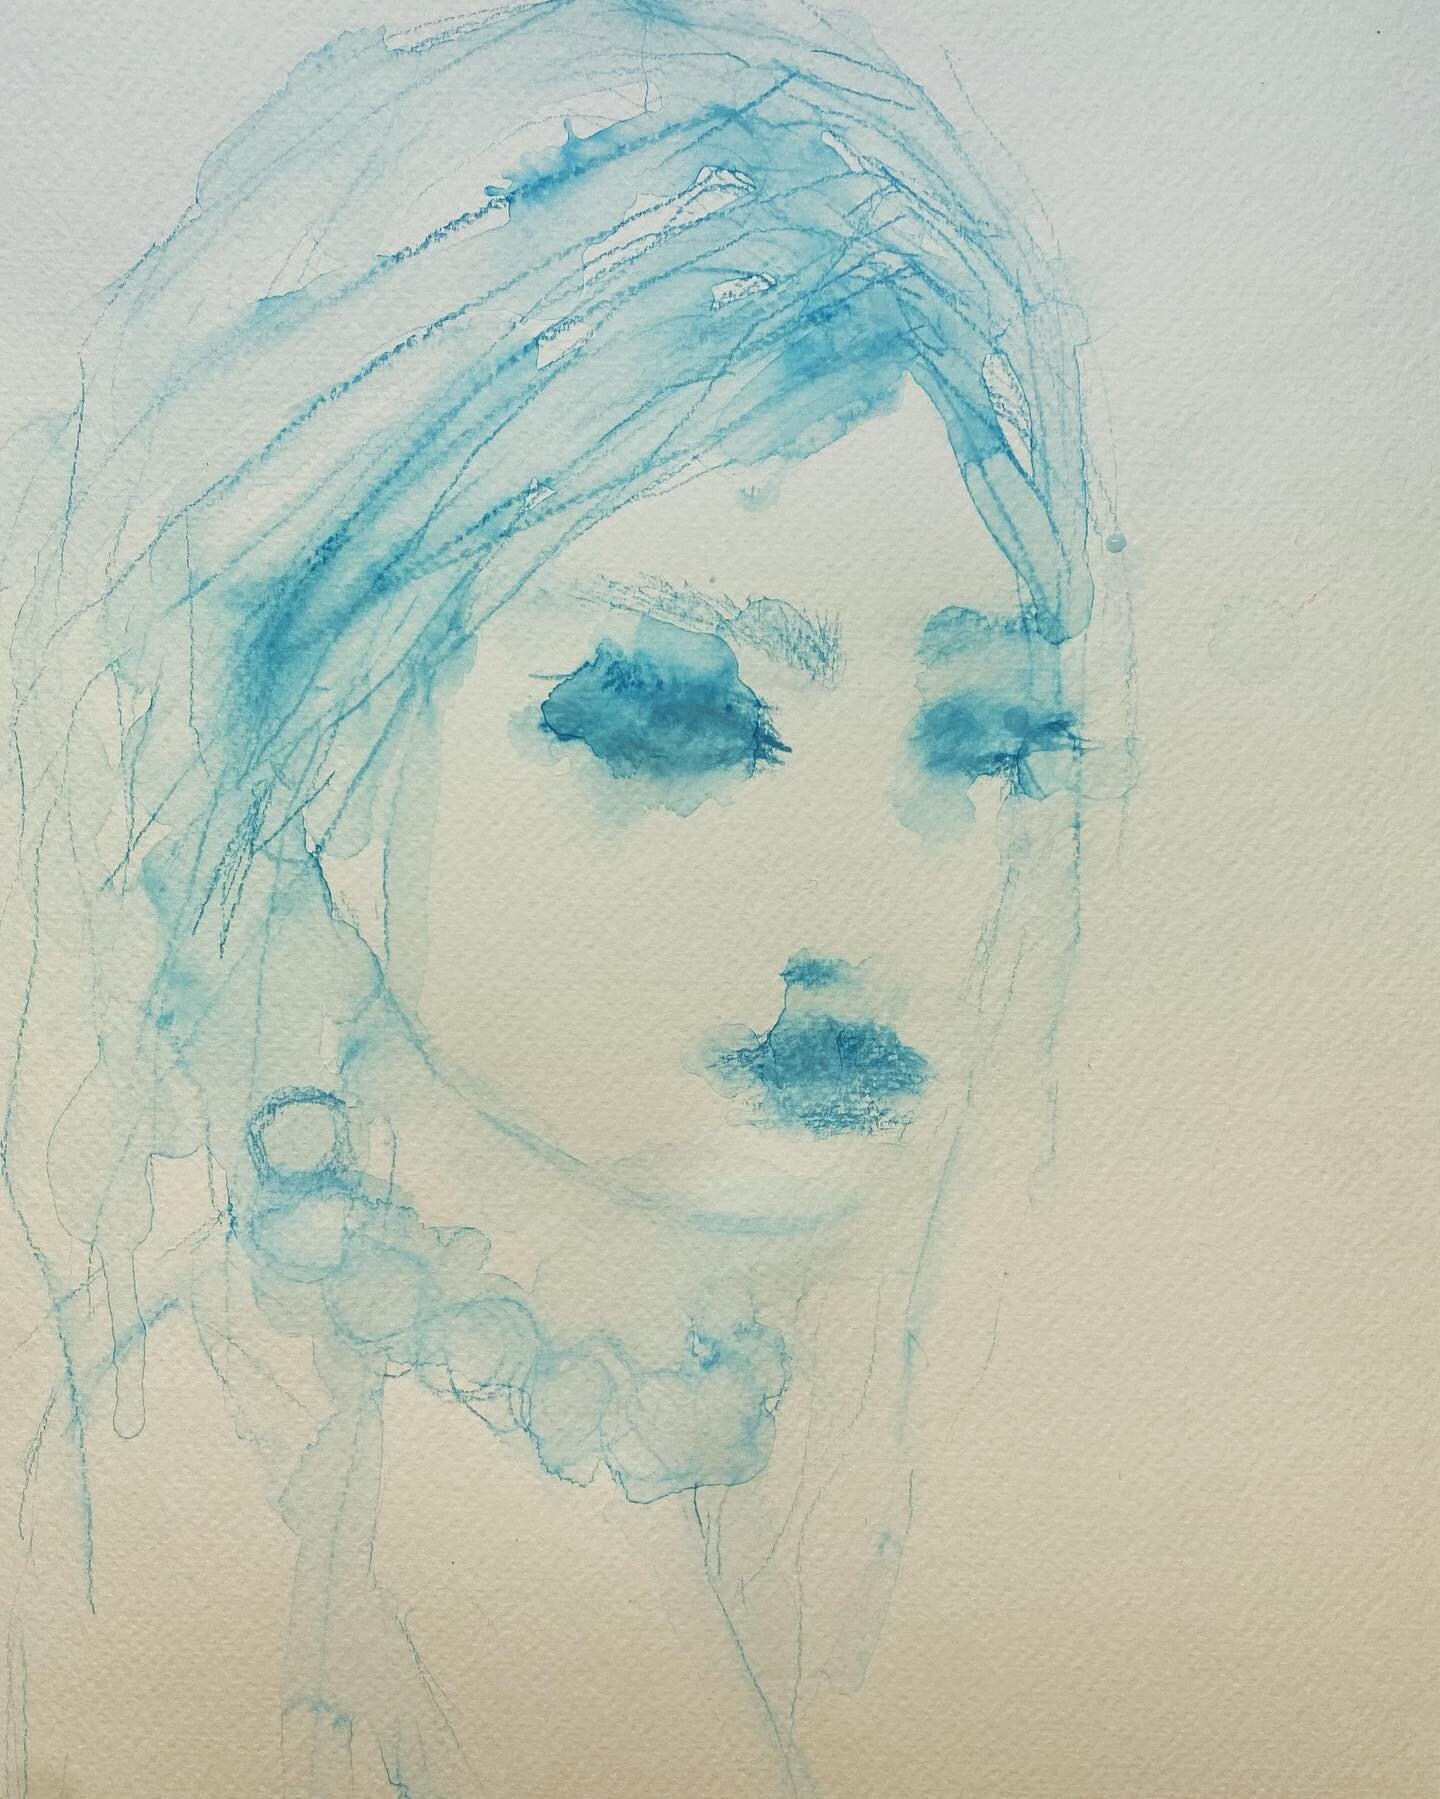 Blue layers #watercolor #portrait #art #fineart #jorunnmulen #artiststudio